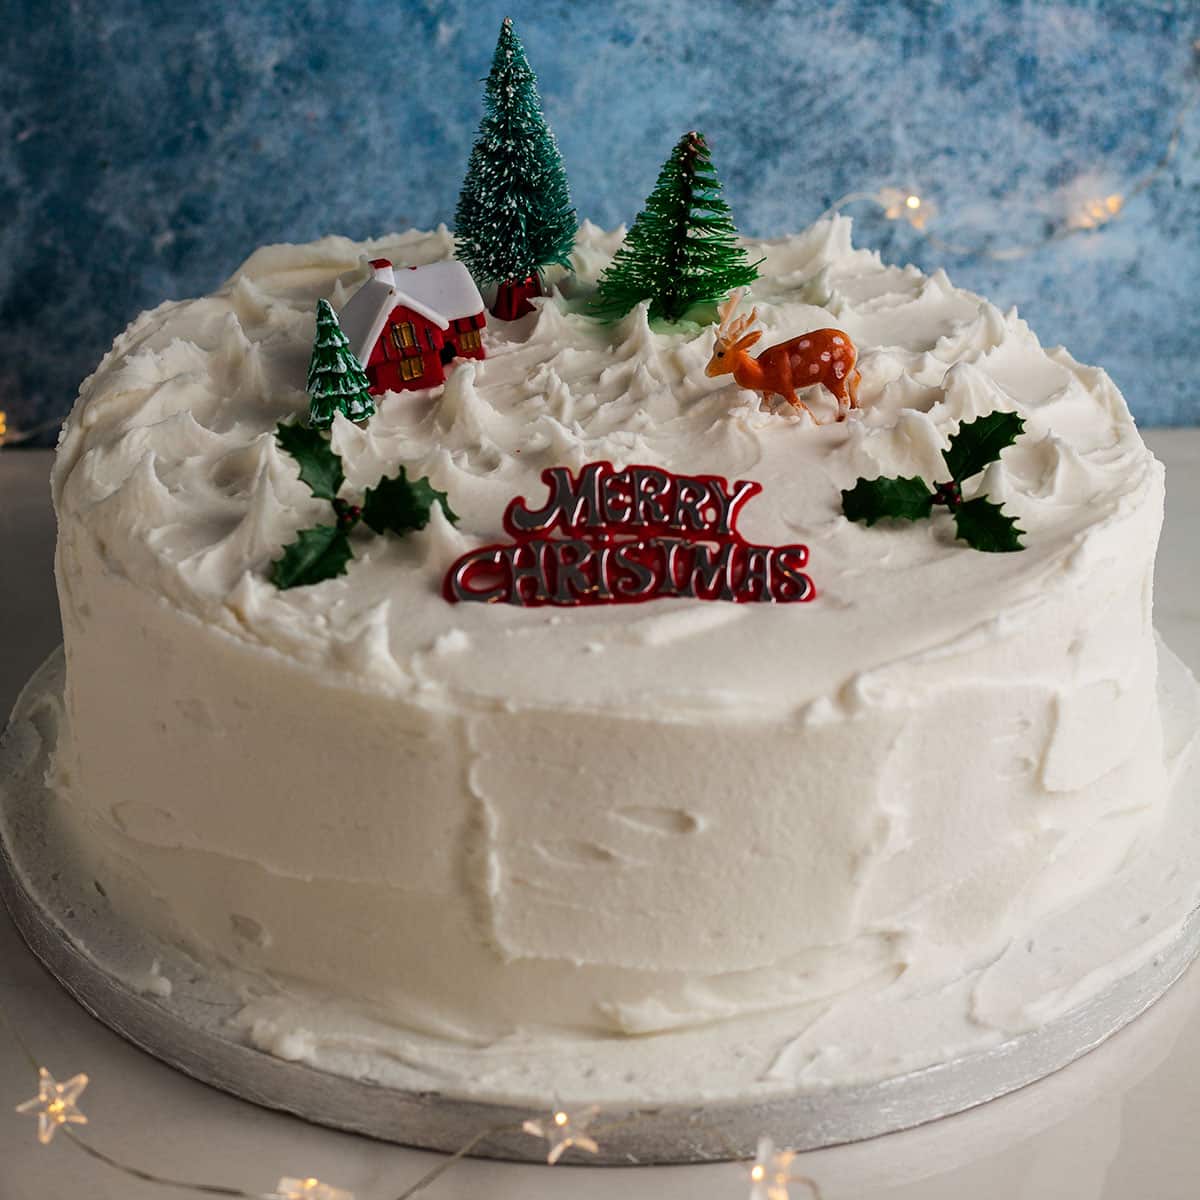 https://onlycrumbsremain.com/wp-content/uploads/2019/11/easy-retro-Christmas-cake-1.jpg